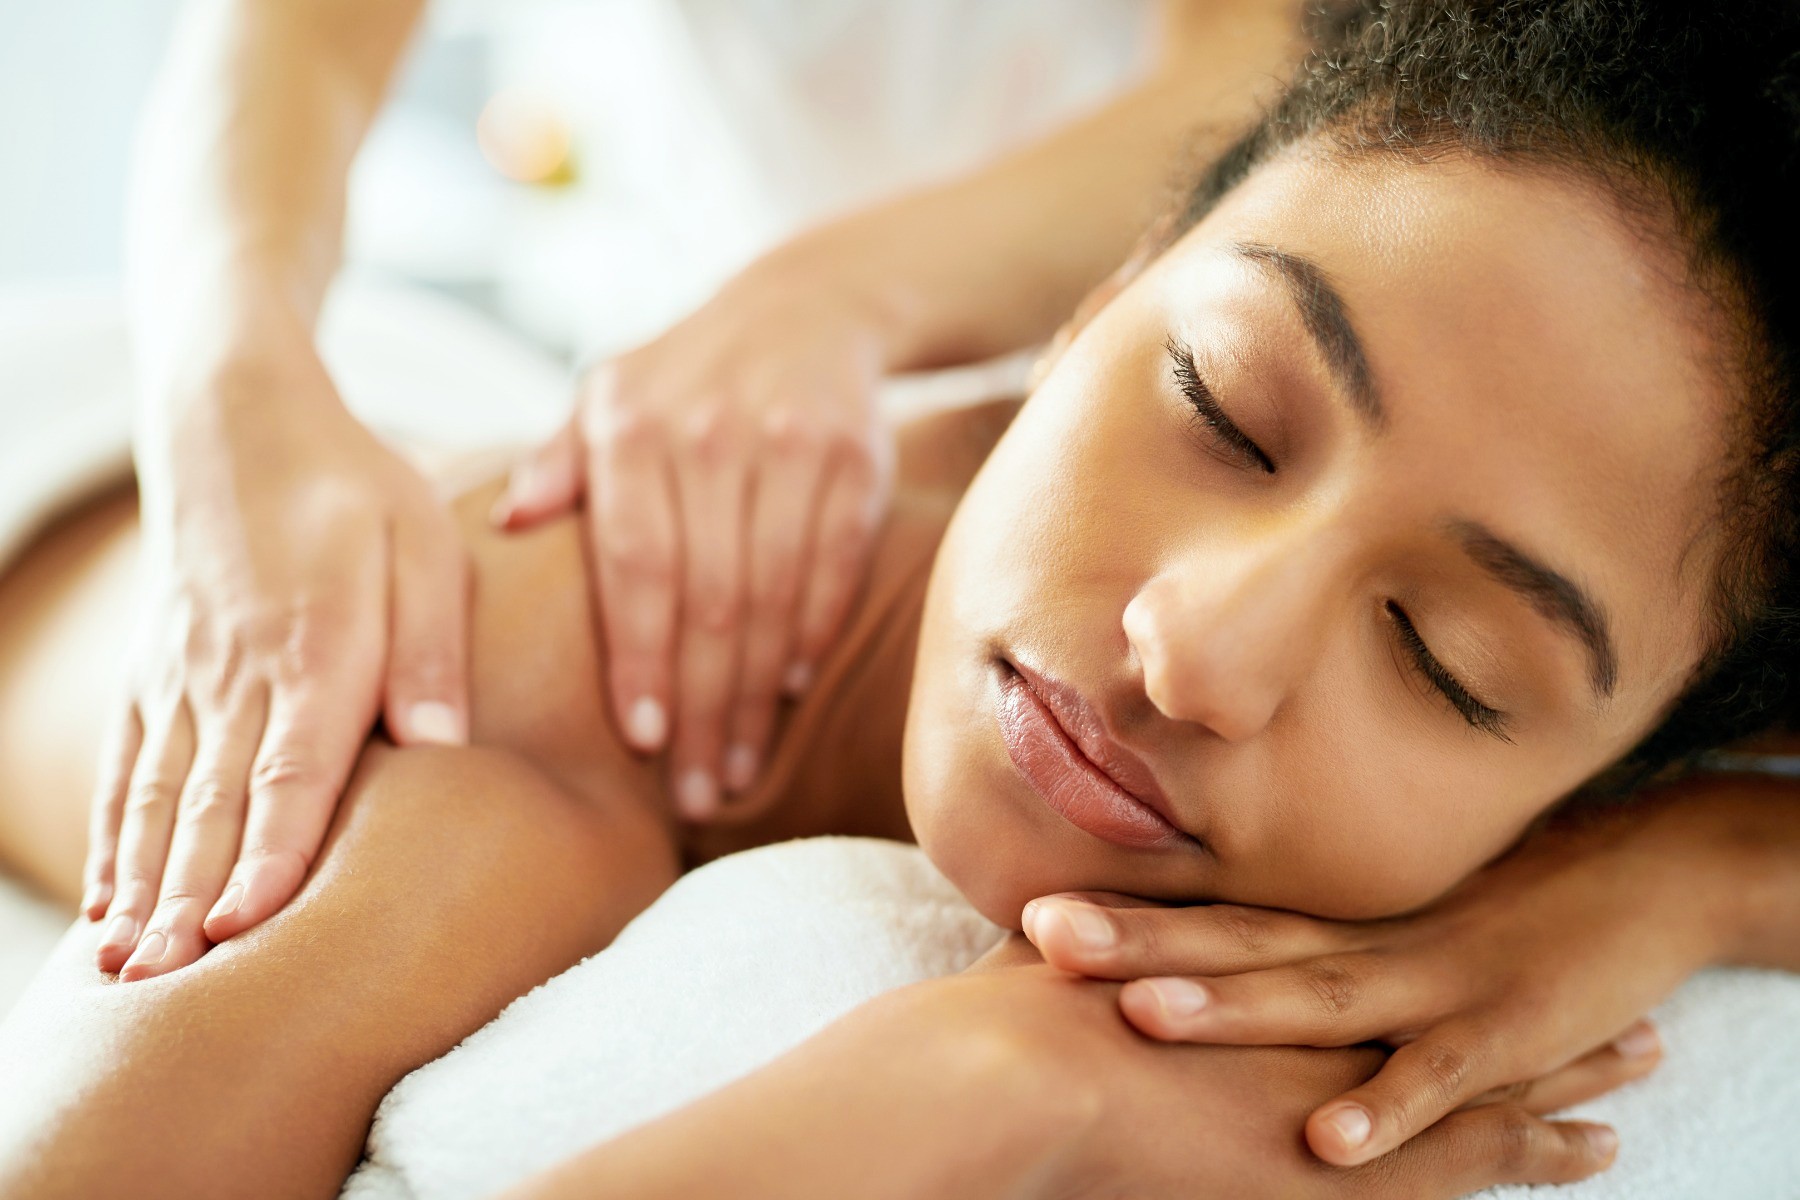 <img src="massage.jpg" alt="massage company deep tissue massage"/> 